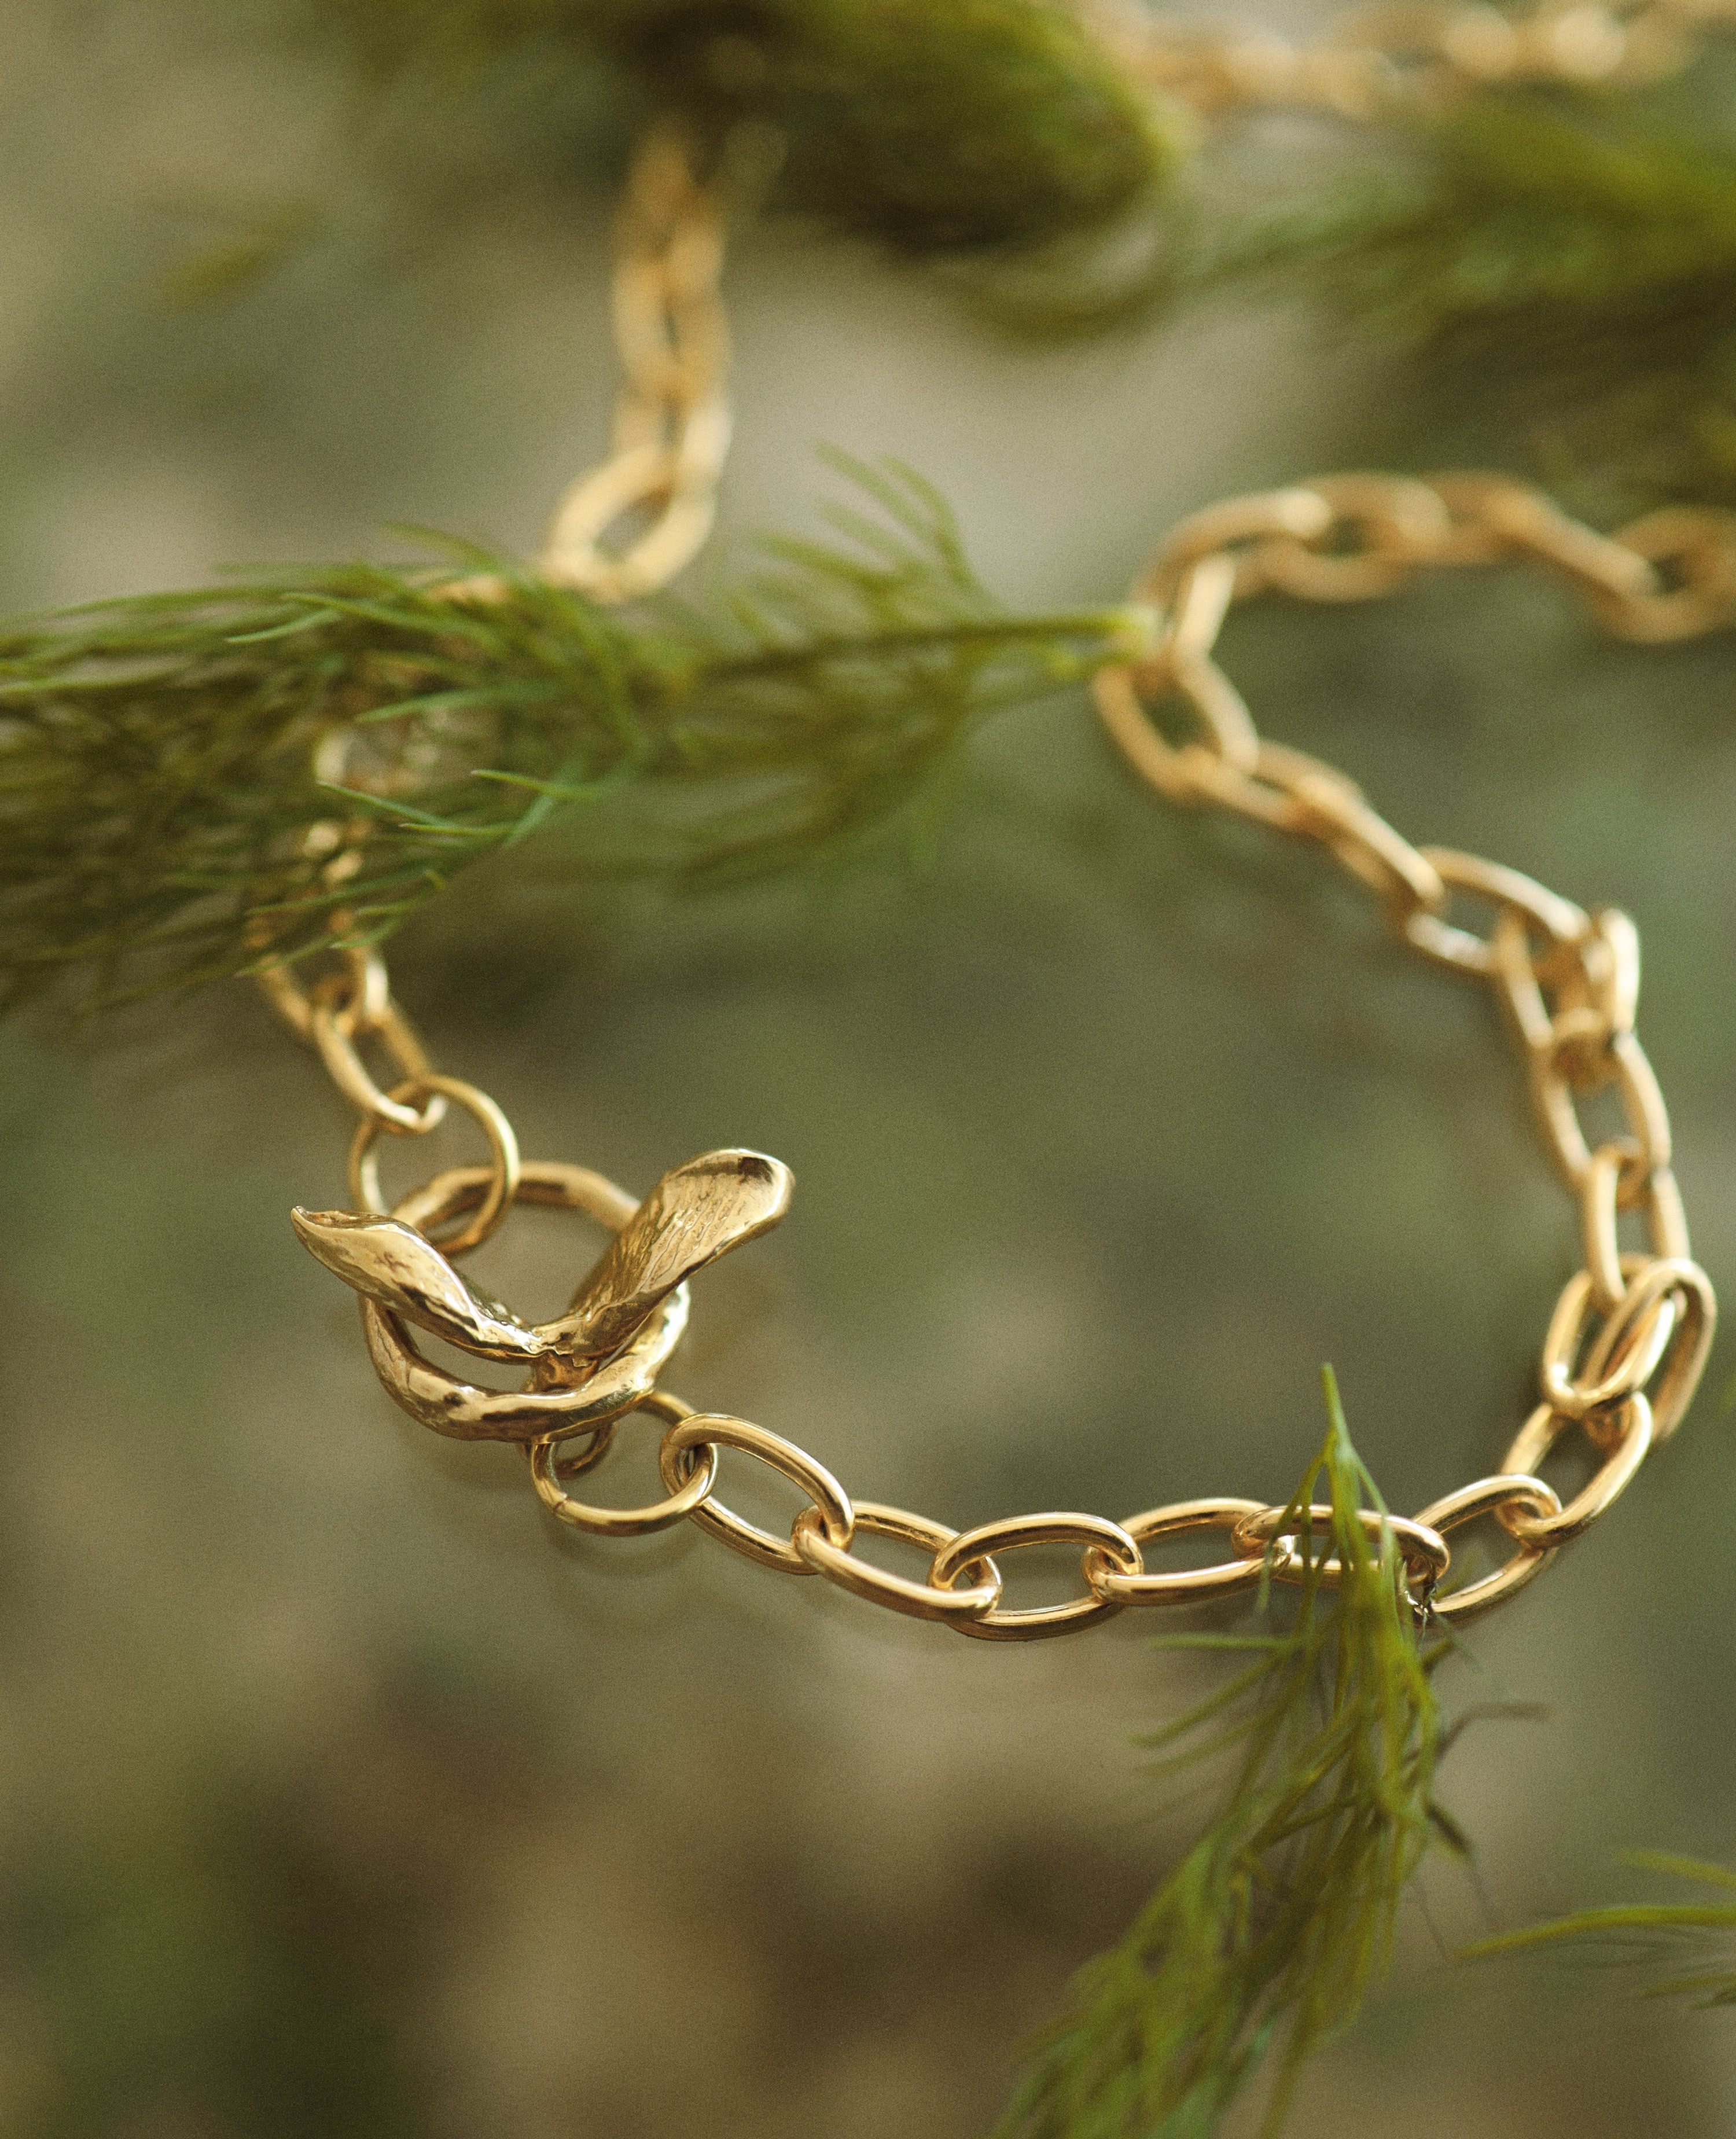 OLEANDER MEDALLION // golden necklace - ORA-C jewelry - handmade jewelry by Montreal based independent designer Caroline Pham